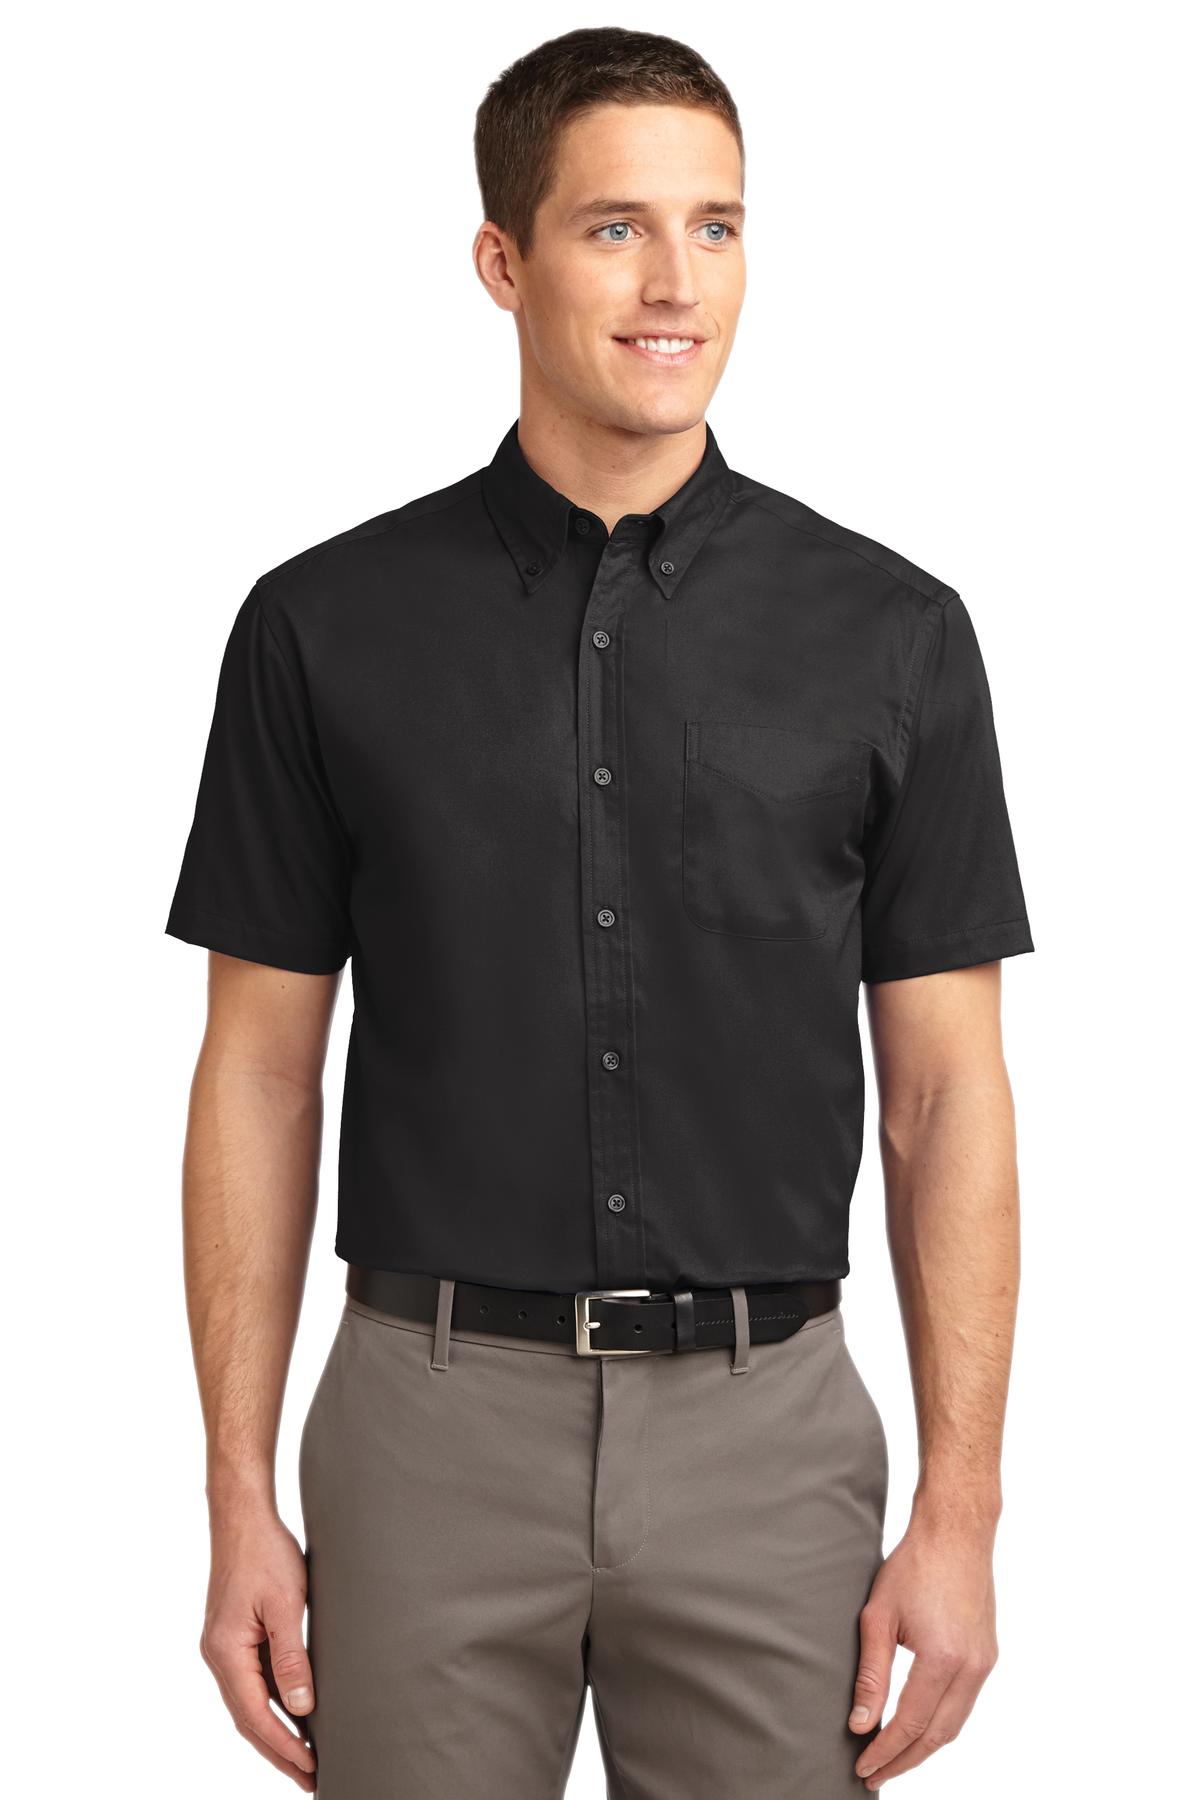 Buy Port Authority Tall Short Sleeve Easy Care Shirt - Port Authority ...